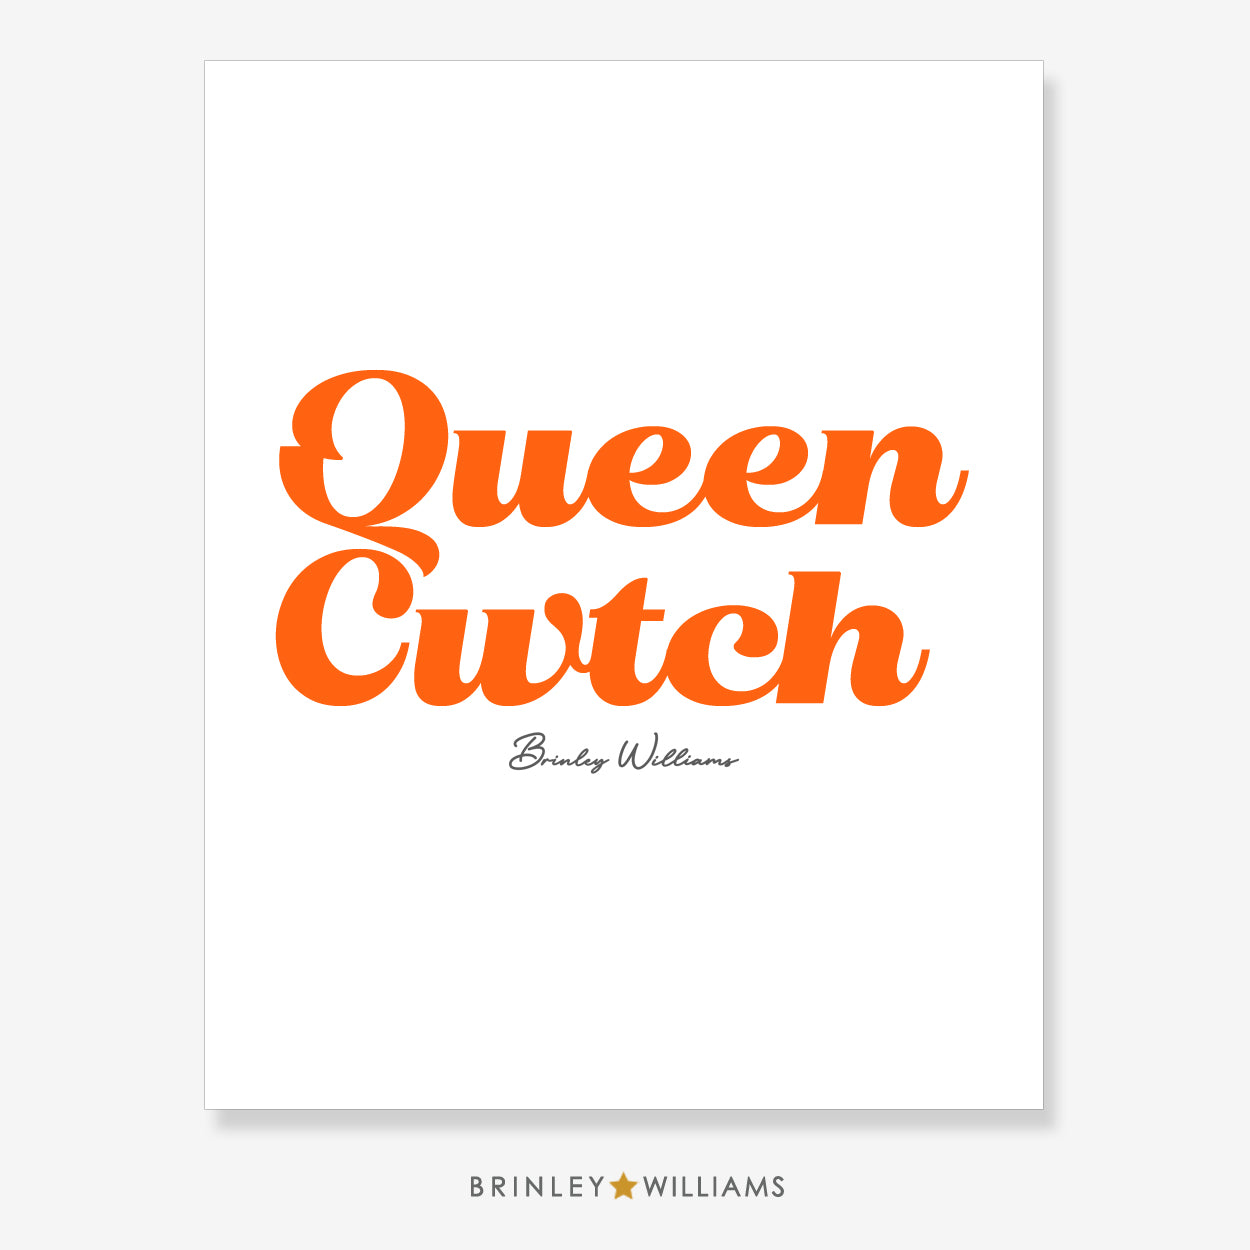 Queen Cwtch Wall Art Poster - Orange